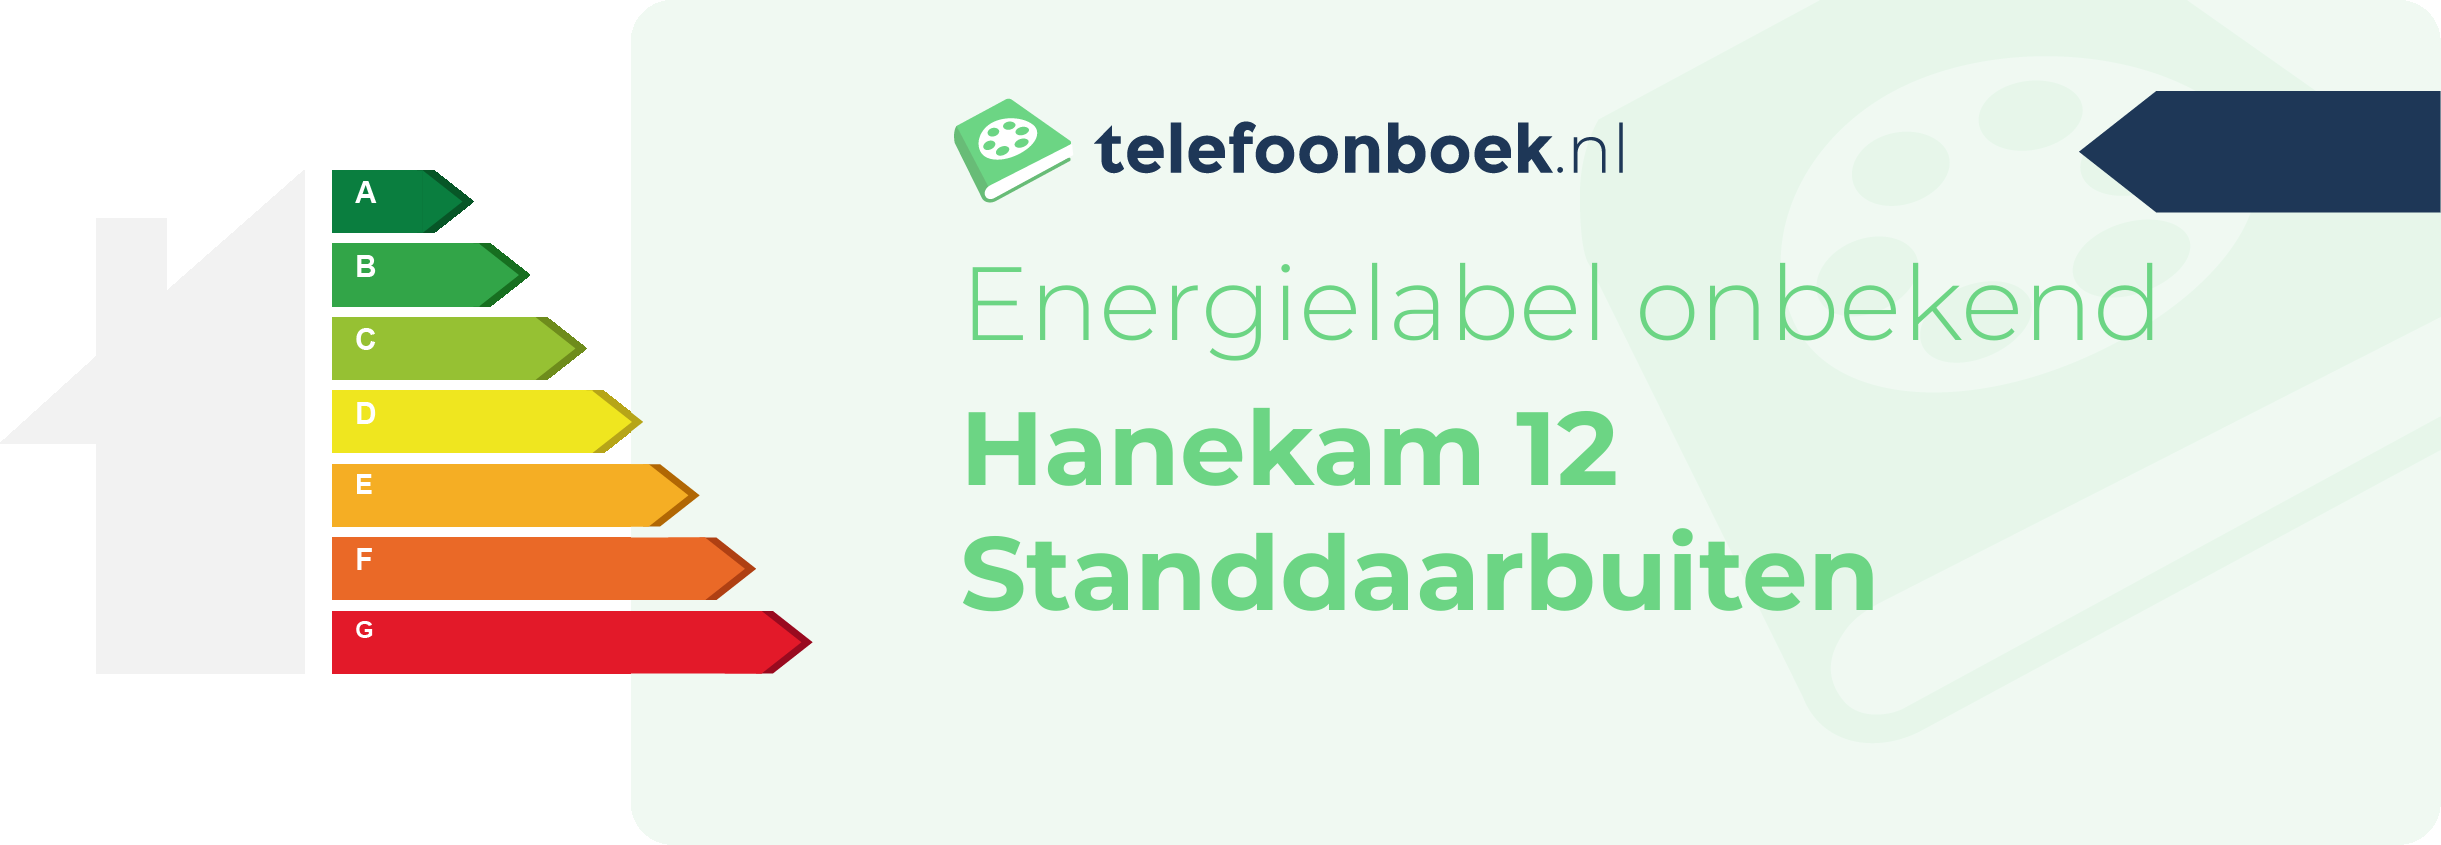 Energielabel Hanekam 12 Standdaarbuiten